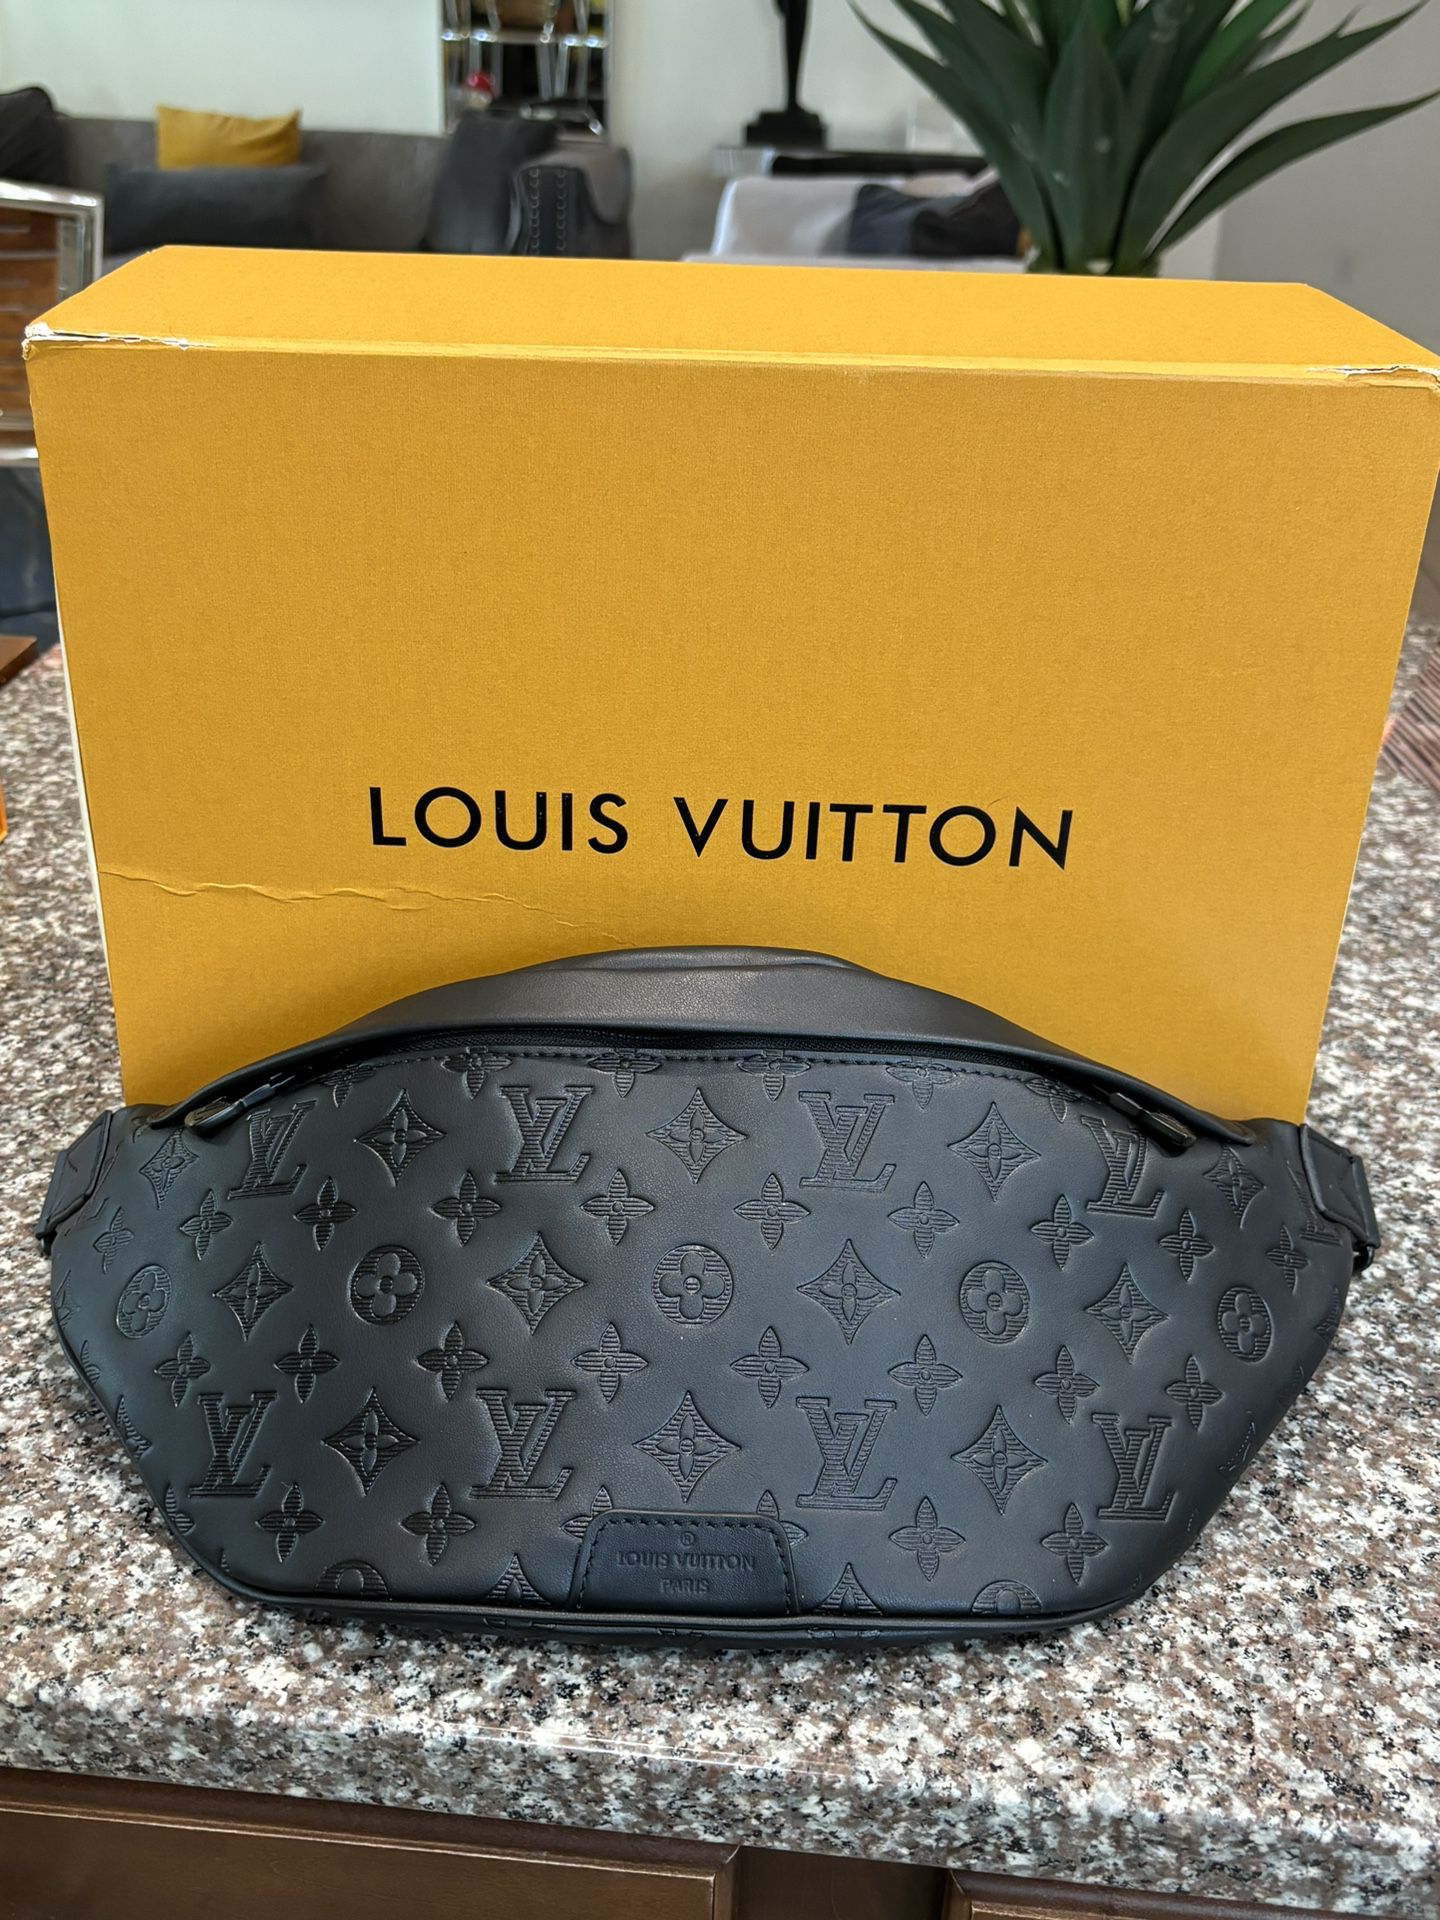 LV Louis Vuitton Bag